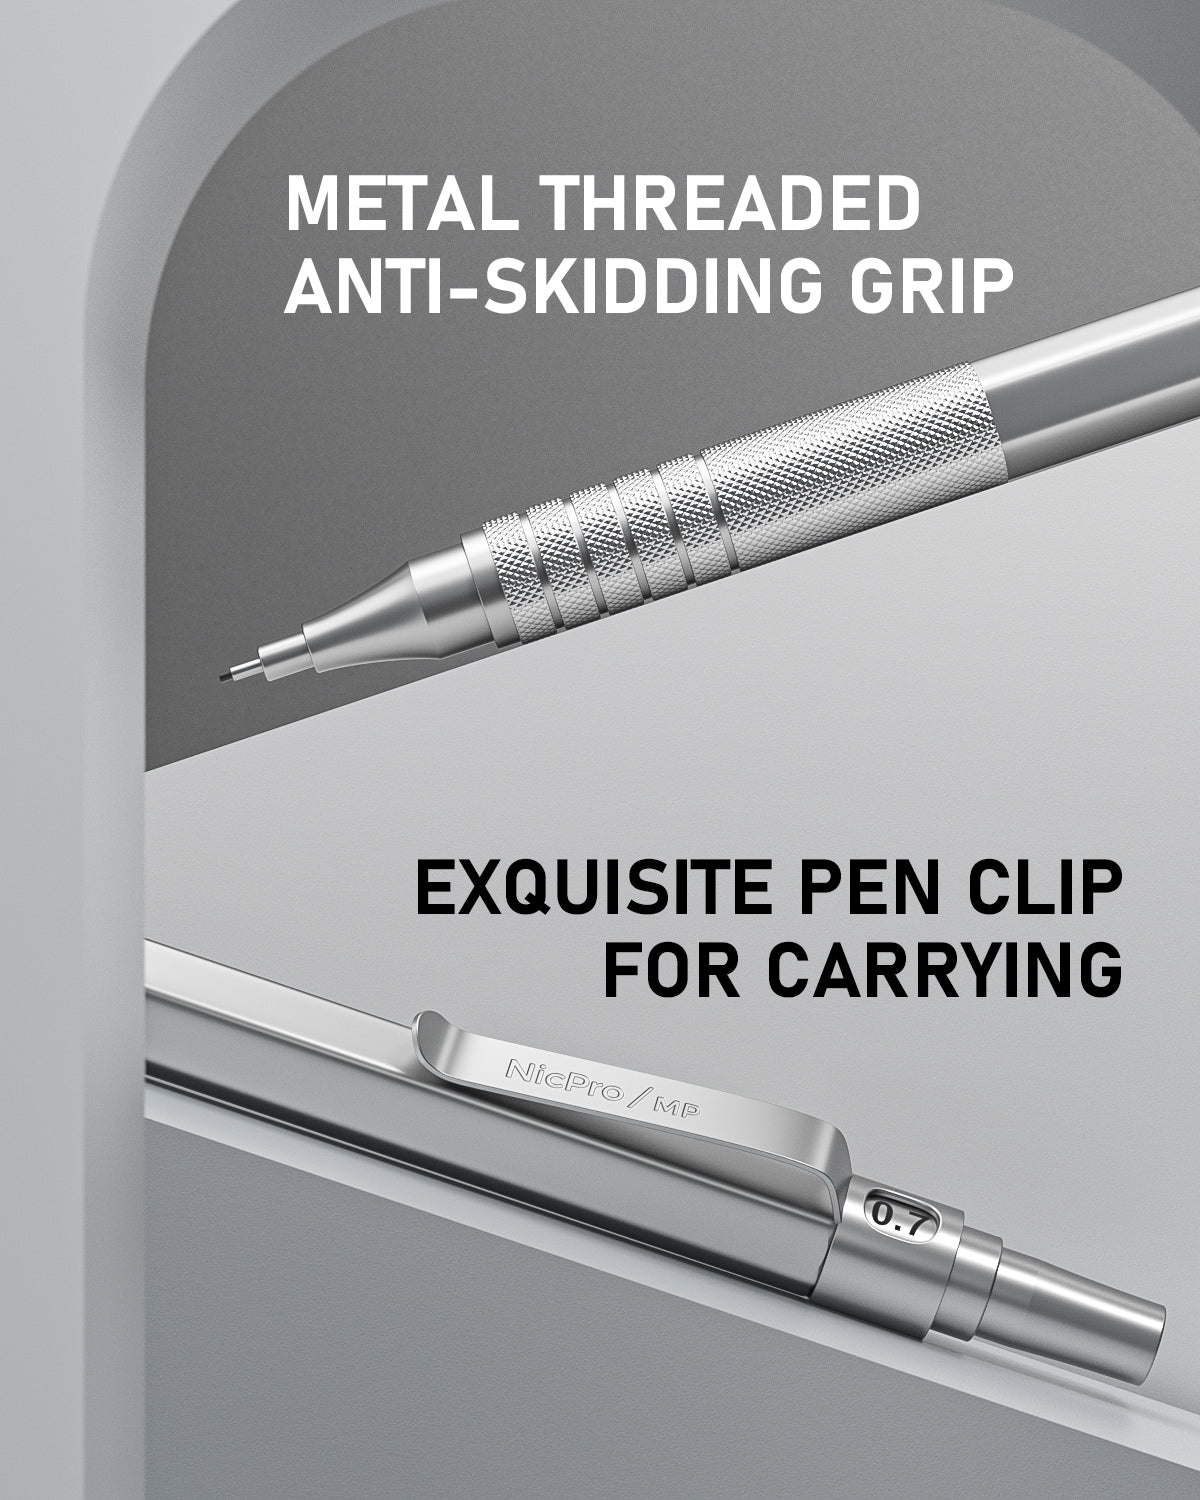 Nicpro 6 PCS Art Mechanical Pencils Set Metal, Artist Drafting Pencil